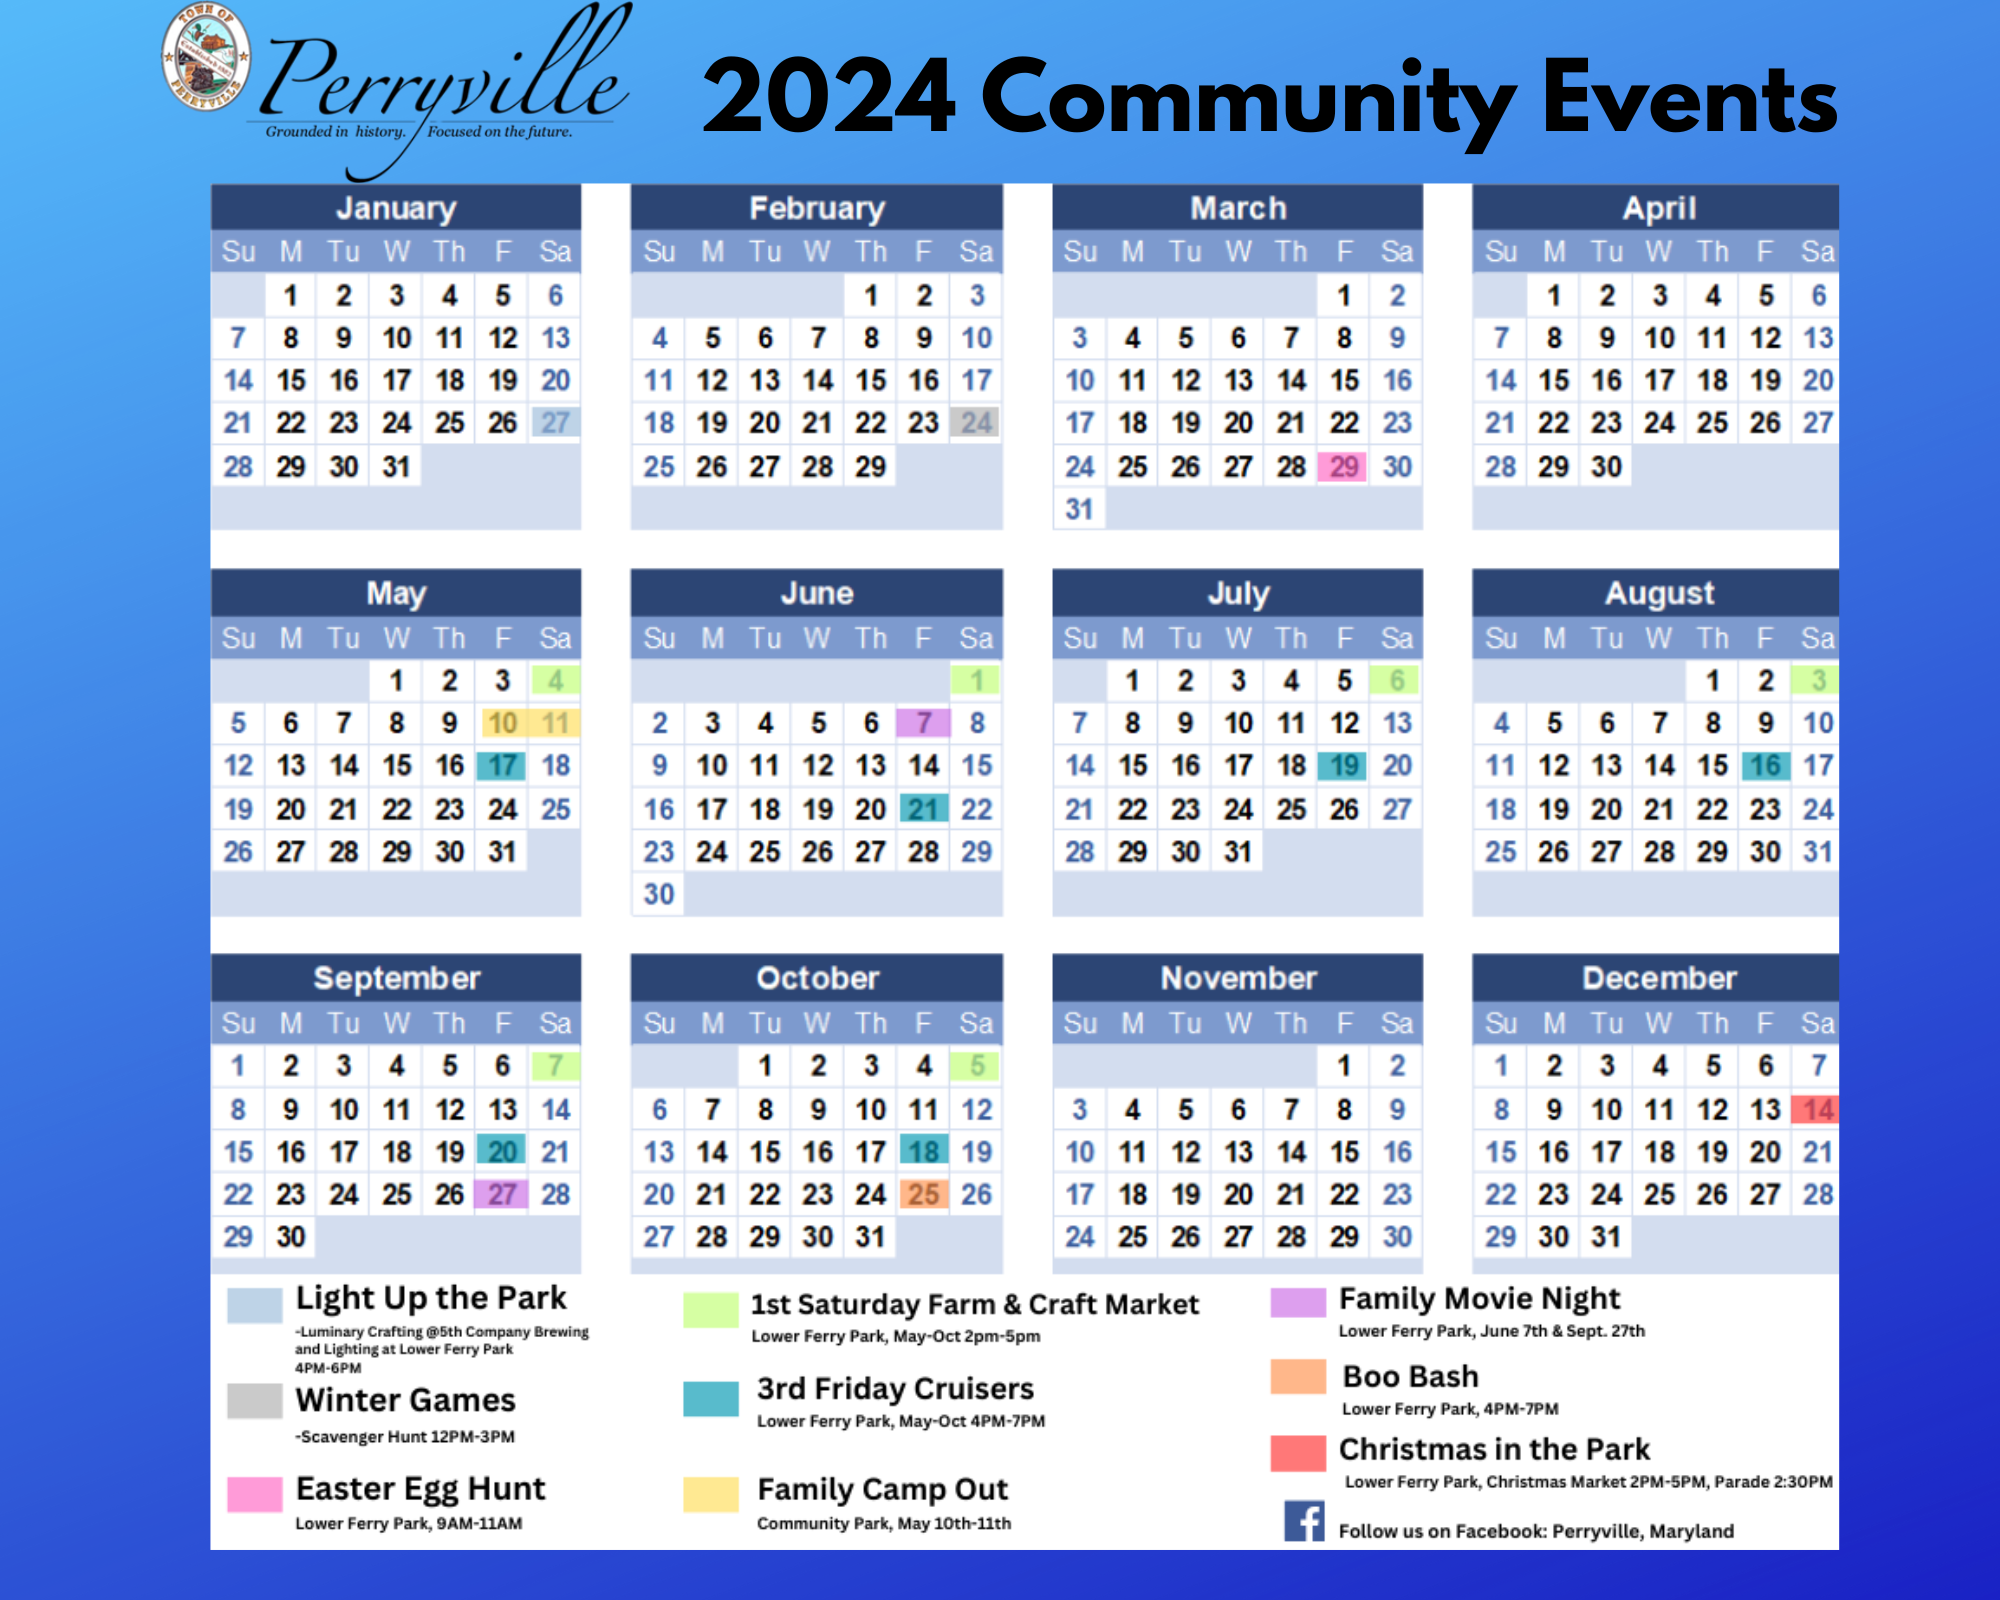 2024 Calendar of Events